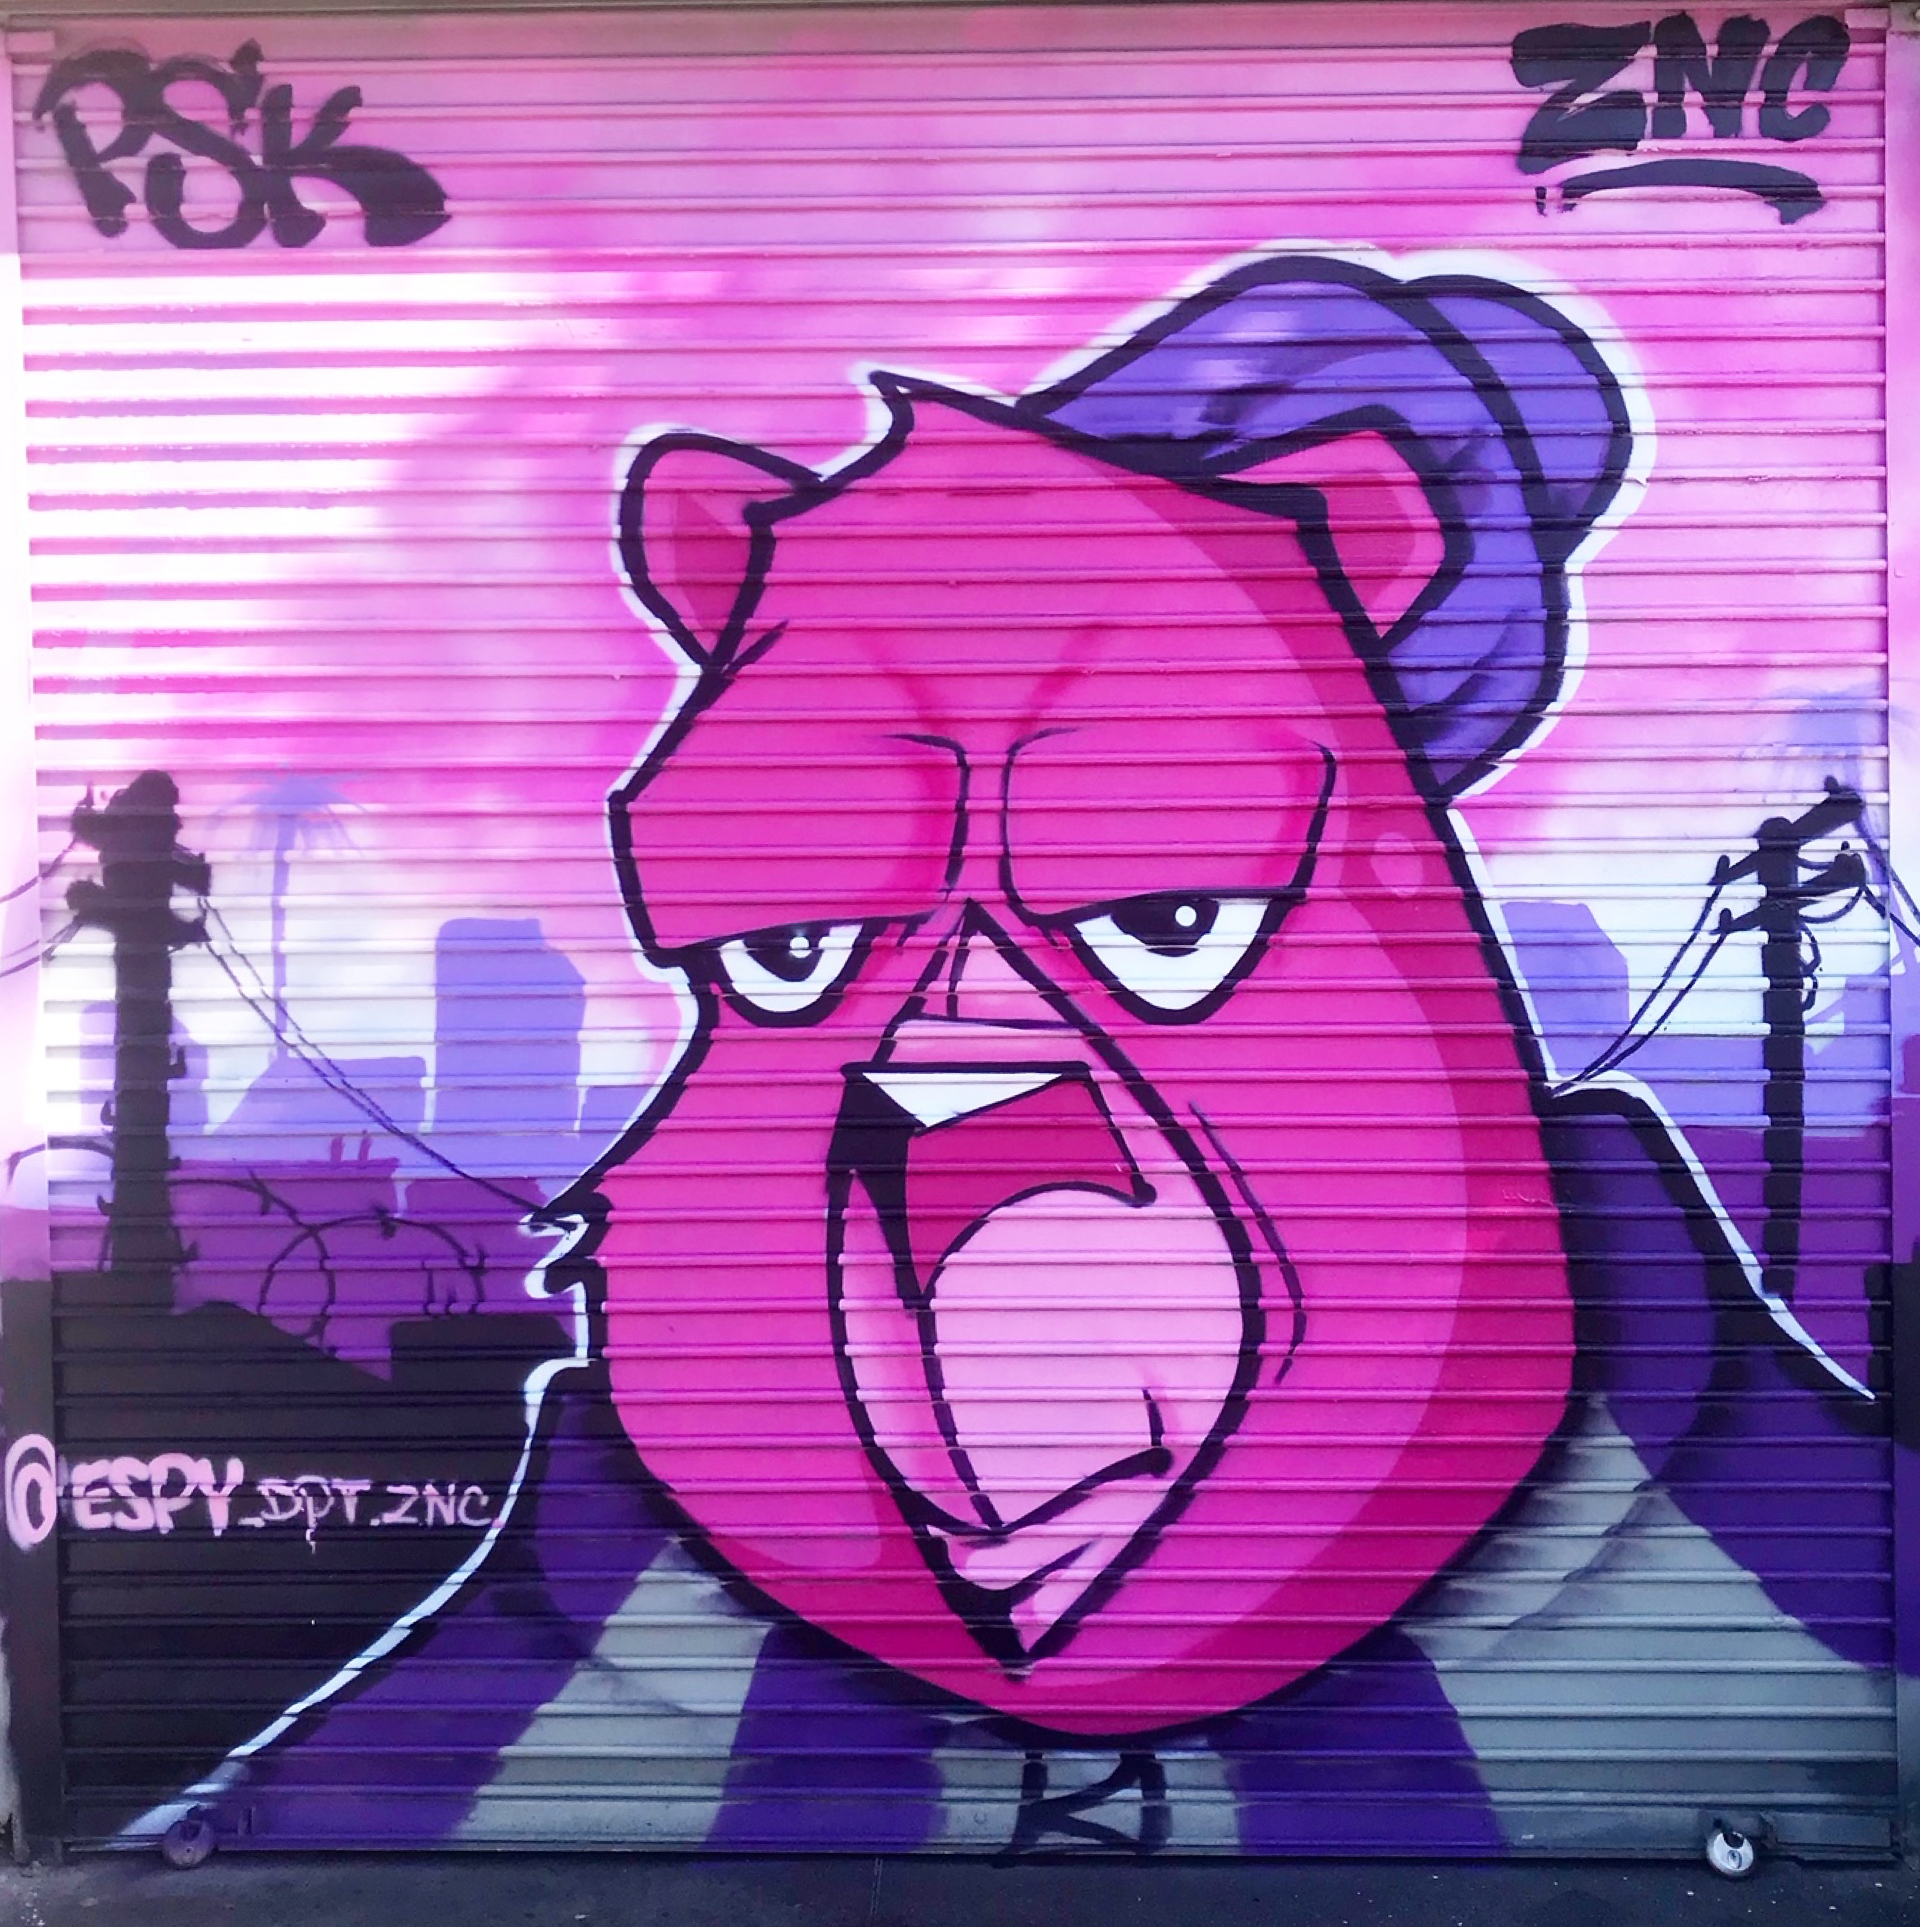 Espy - Graffiti Artist | Throw Up Magazine